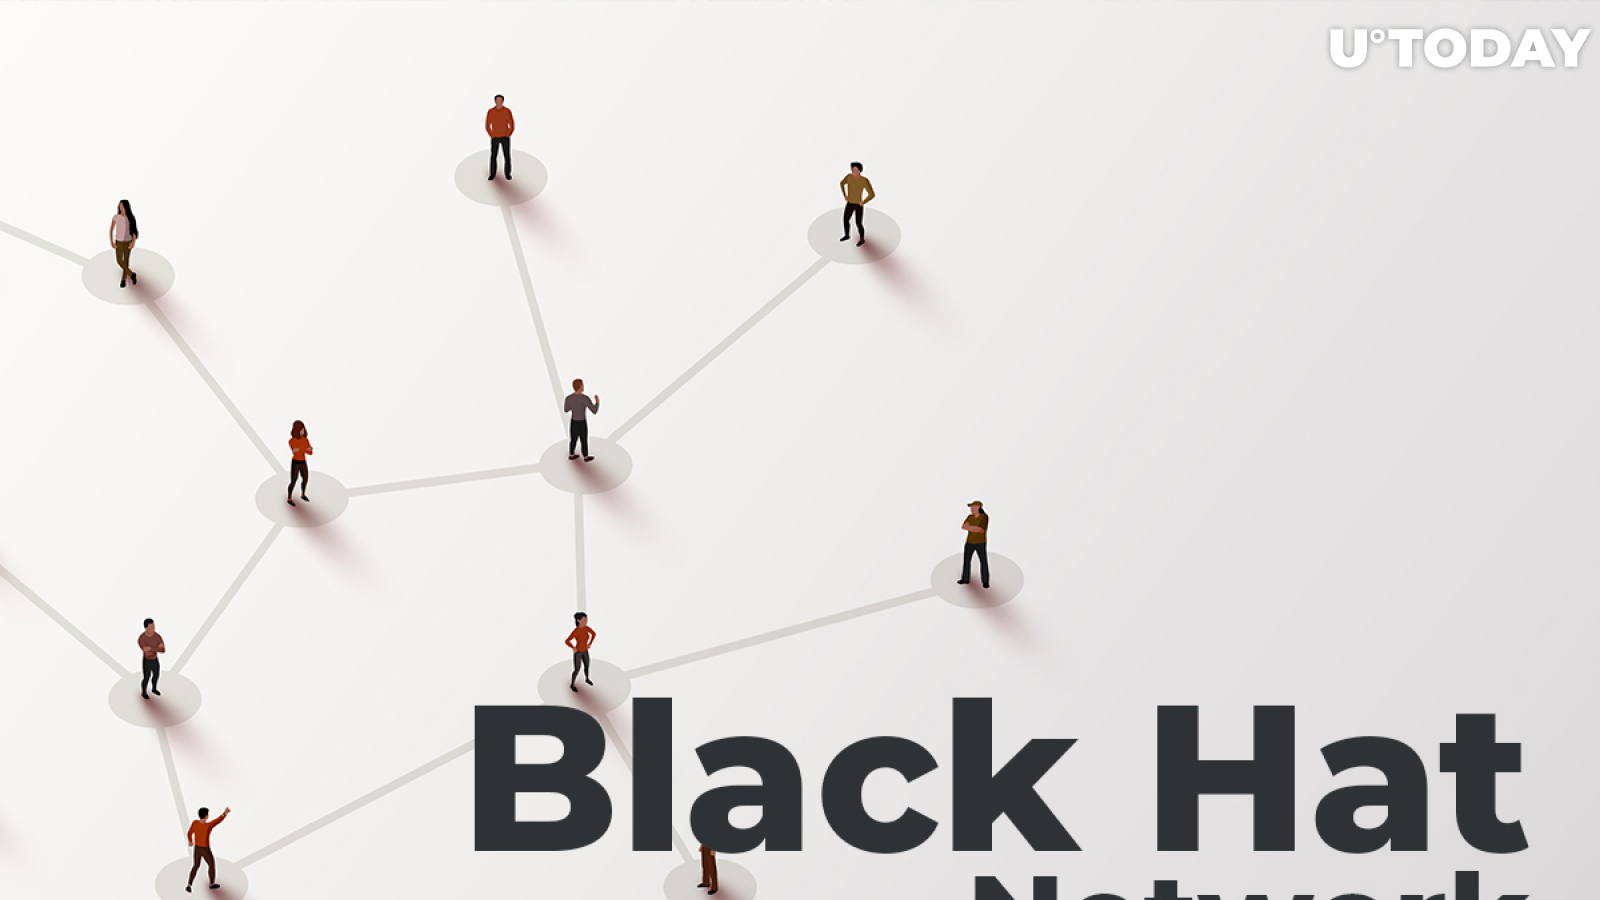 Elrond-Based Black Hat Network Reshapes the Online Freelance Market, Here's How